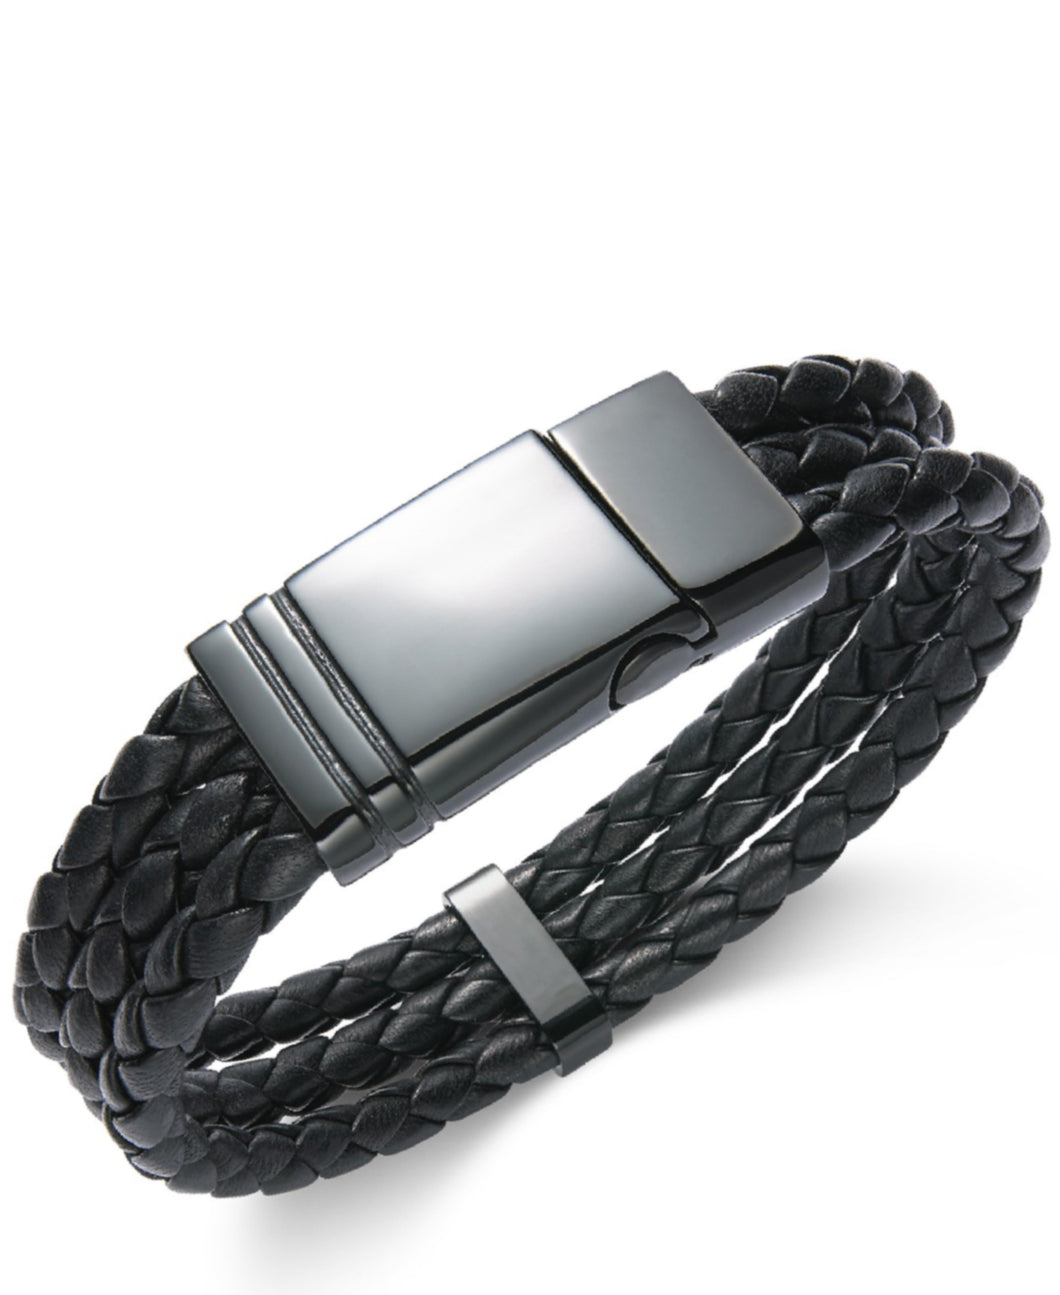 Men's Black Leather and Steel Braided Bracelet 